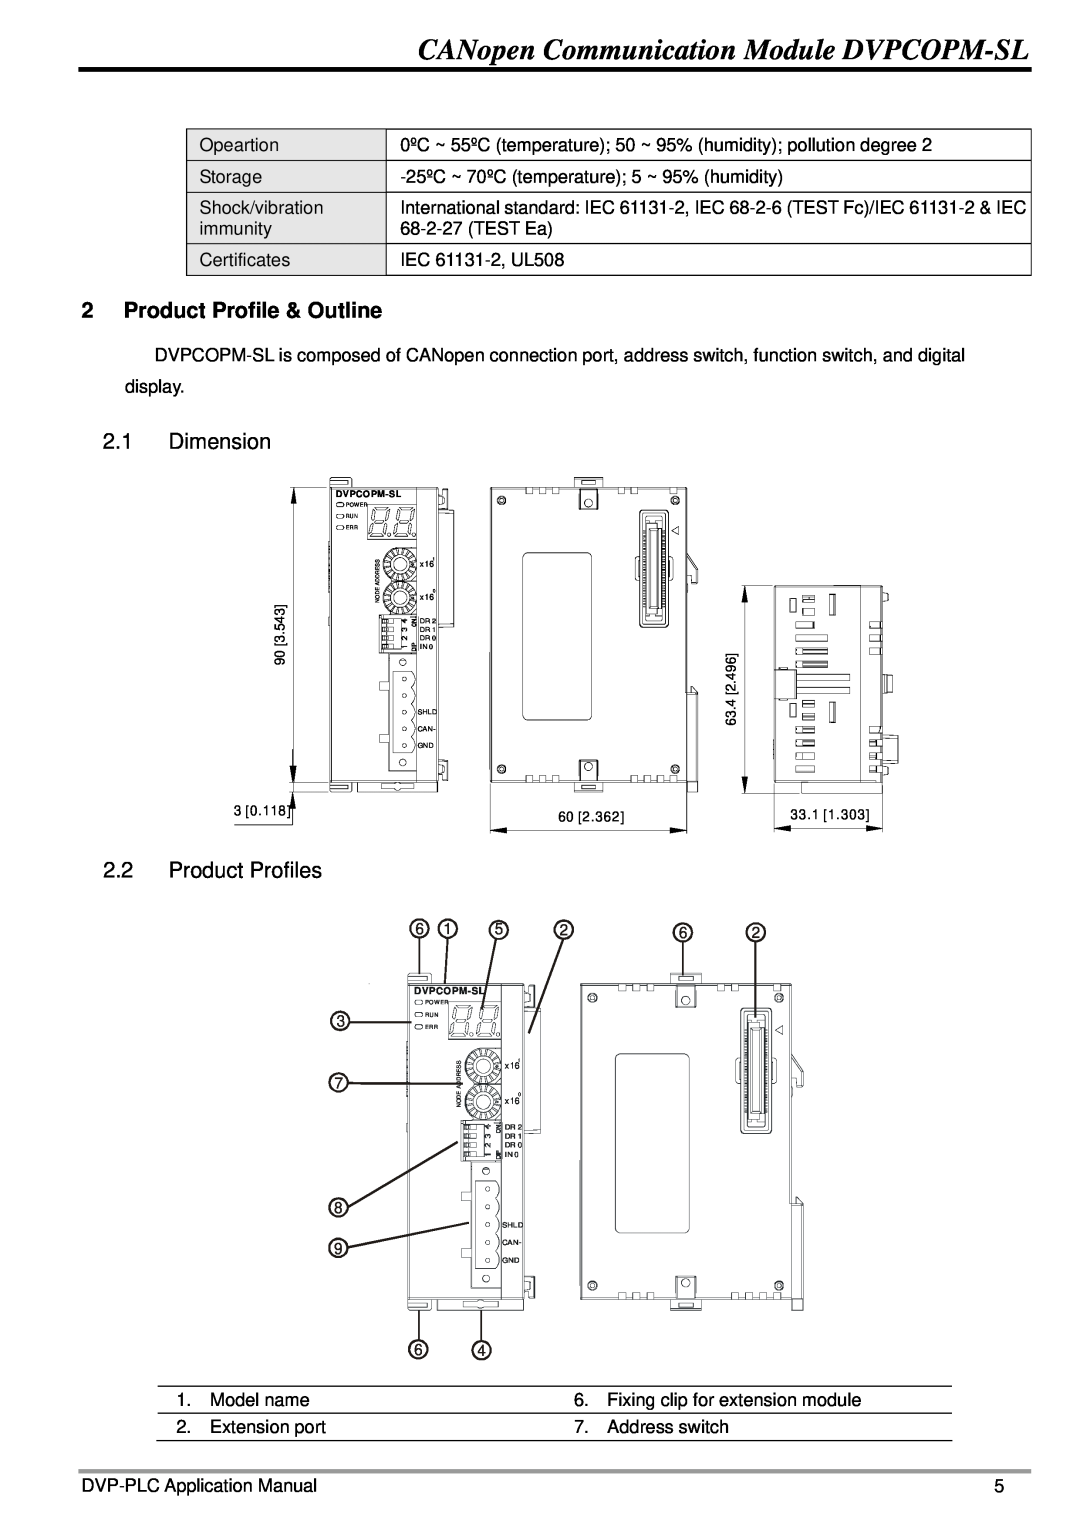 Delta Electronics DVPCOPM-SL manual Product Profile & Outline, Dimension, Product Profiles 